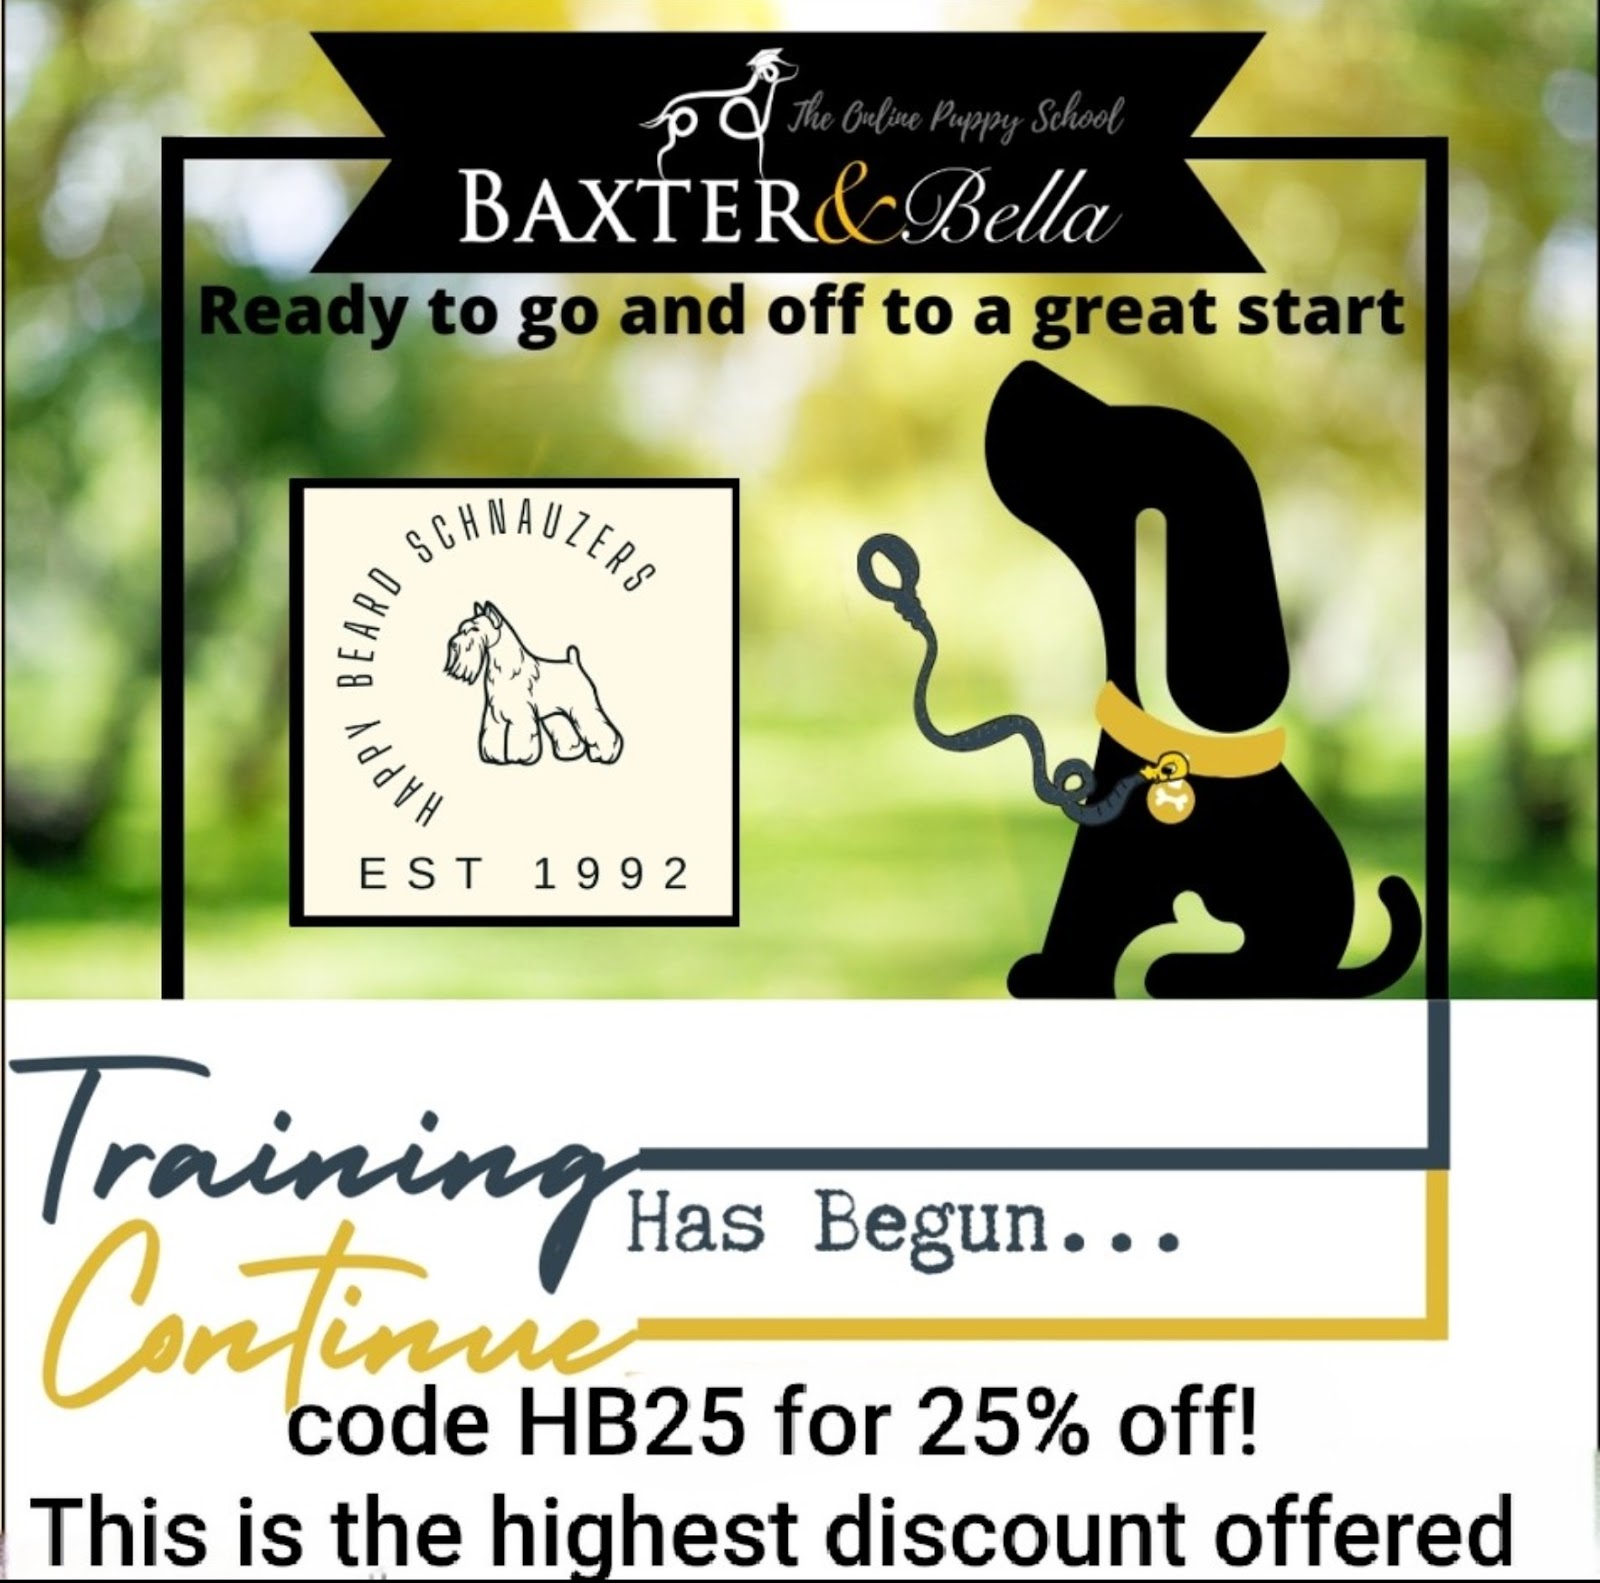 Baxter & Bella training program 25% off their program discount code HB25